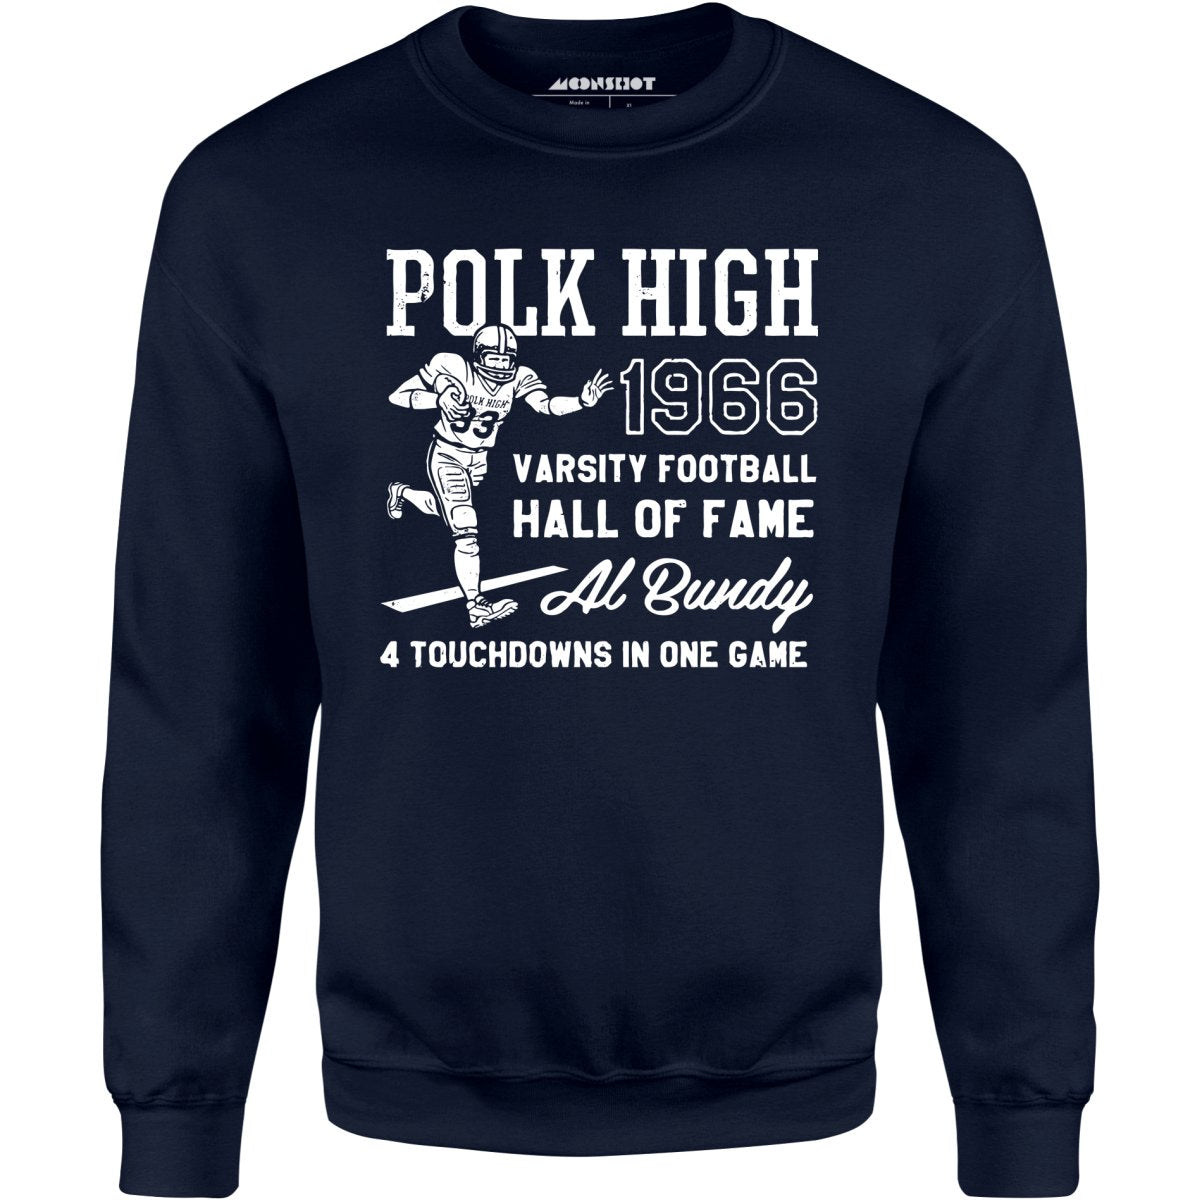 Al Bundy - 1966 Polk High Varsity Football Hall of Fame - Unisex Sweatshirt